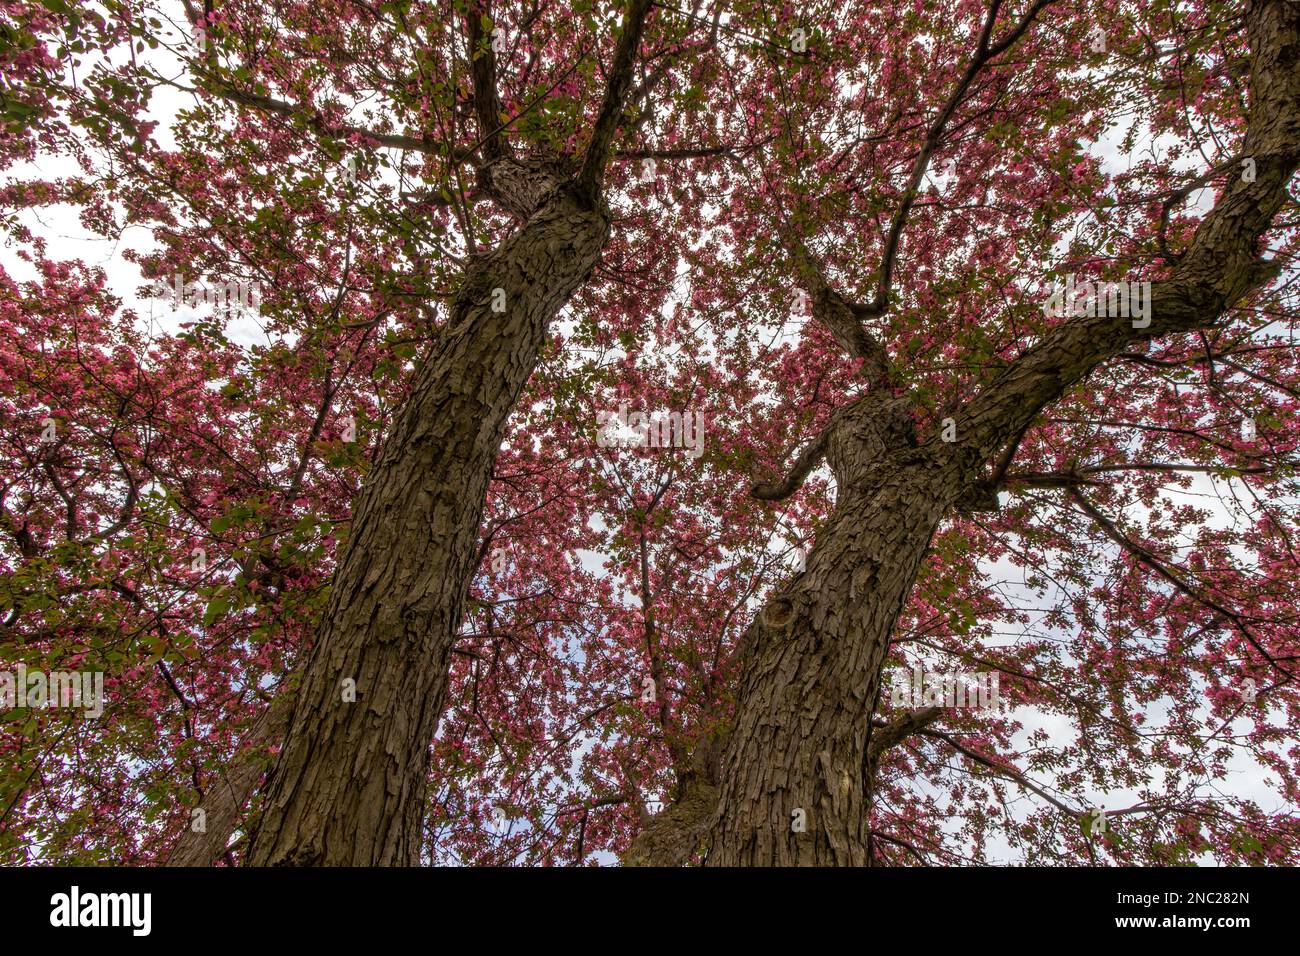 A view upwards underneath elderly crabapple trees. Stock Photo